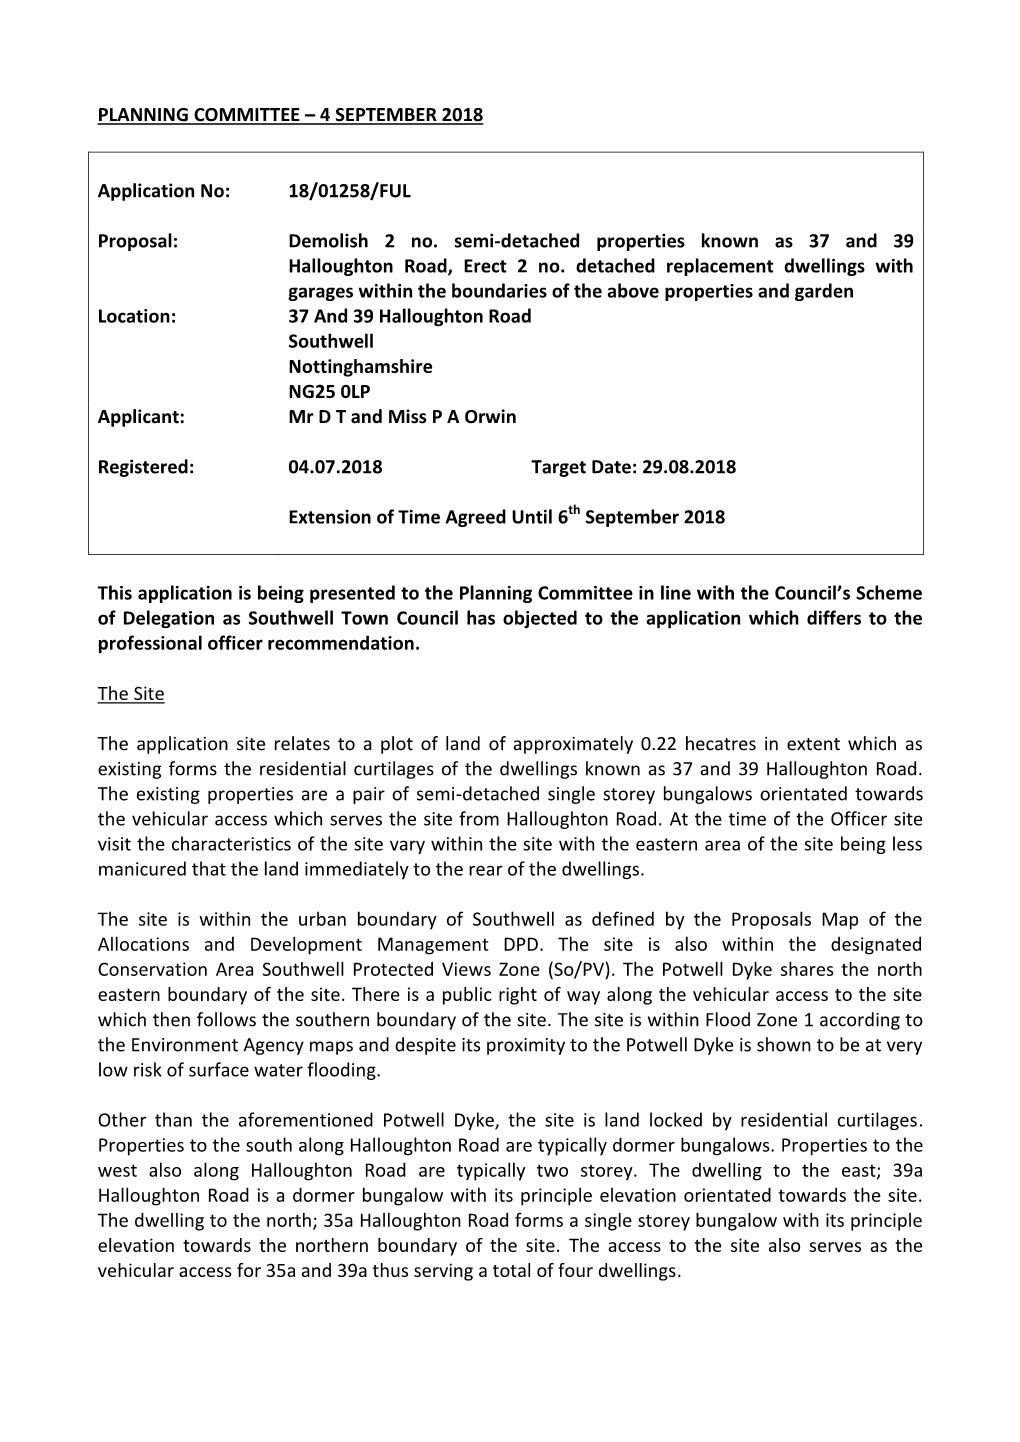 18/01258/FUL Proposal: Demolish 2 No. Semi-Detached Properties